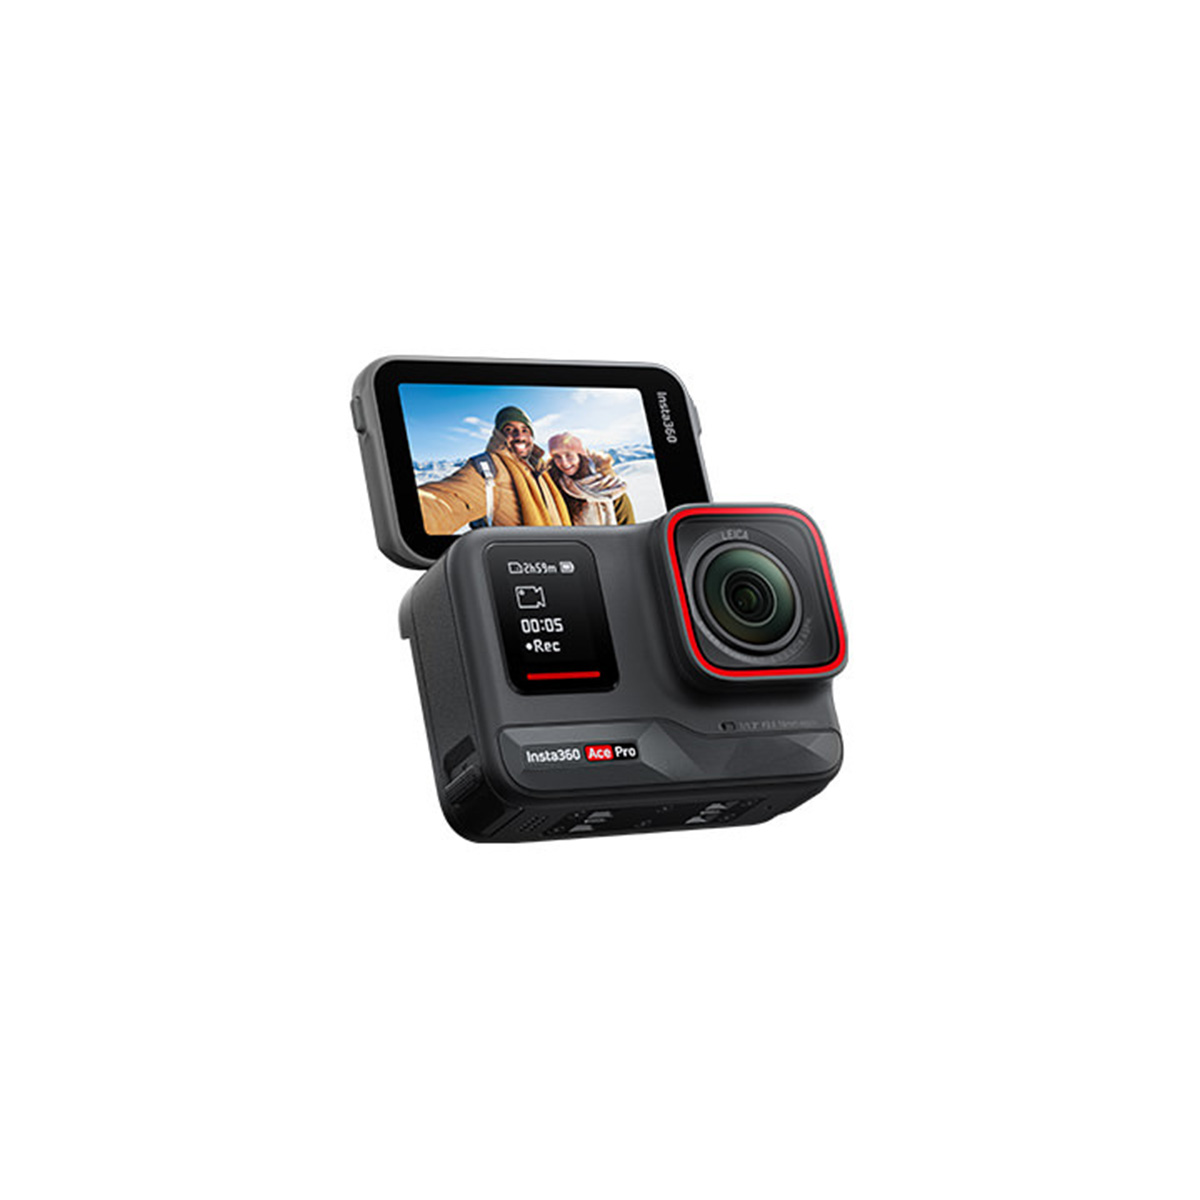 Insta360 Ace Pro Action Camera 8K Video 4K 120 FPS 10M Waterproof